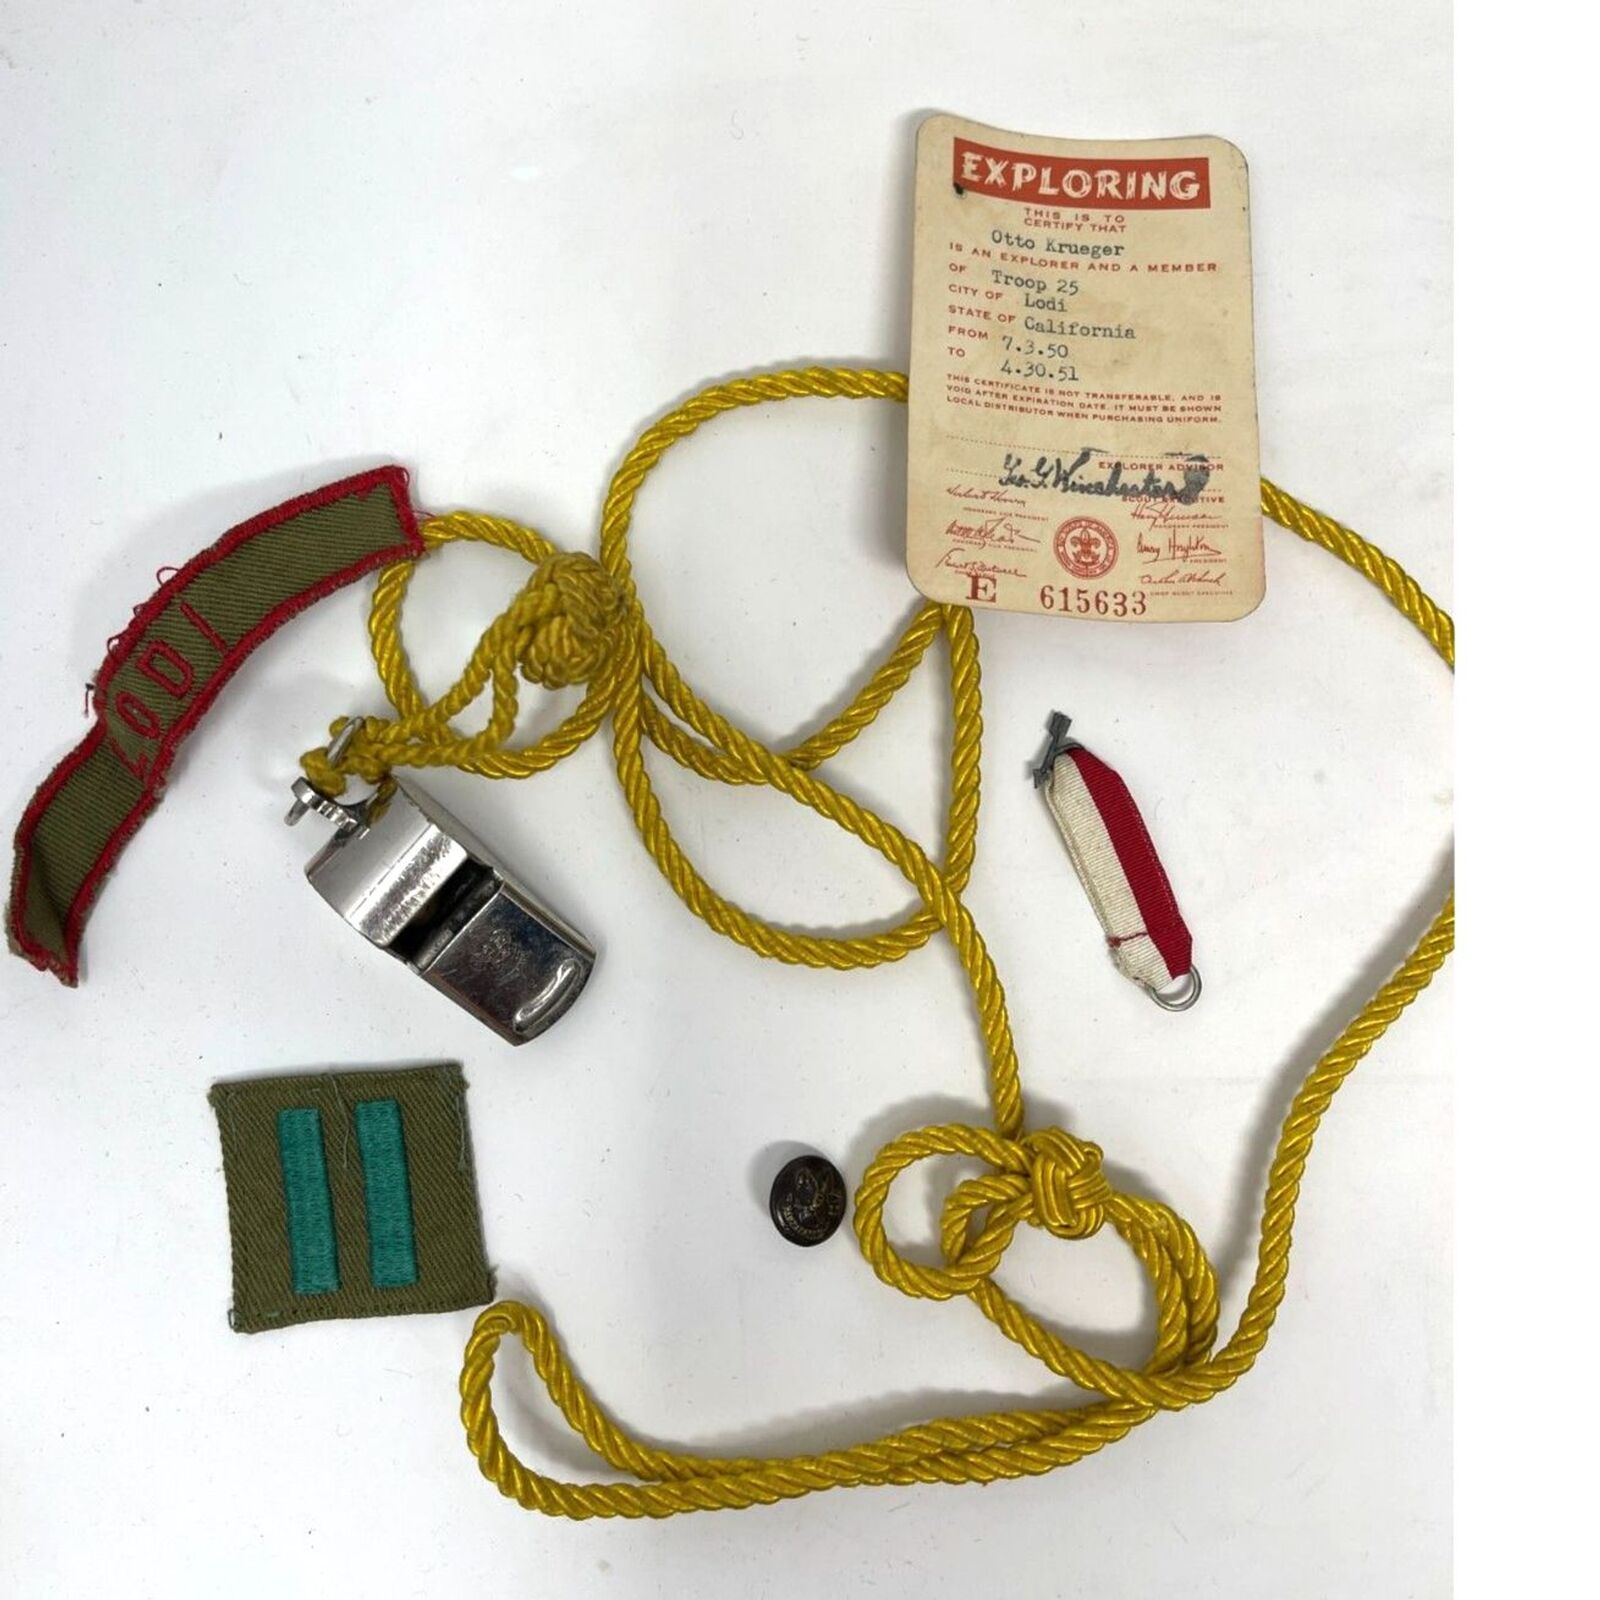 Vintage 1950s Boy Scouts Lot: Whistle, Patches, Exploring Card & Button 